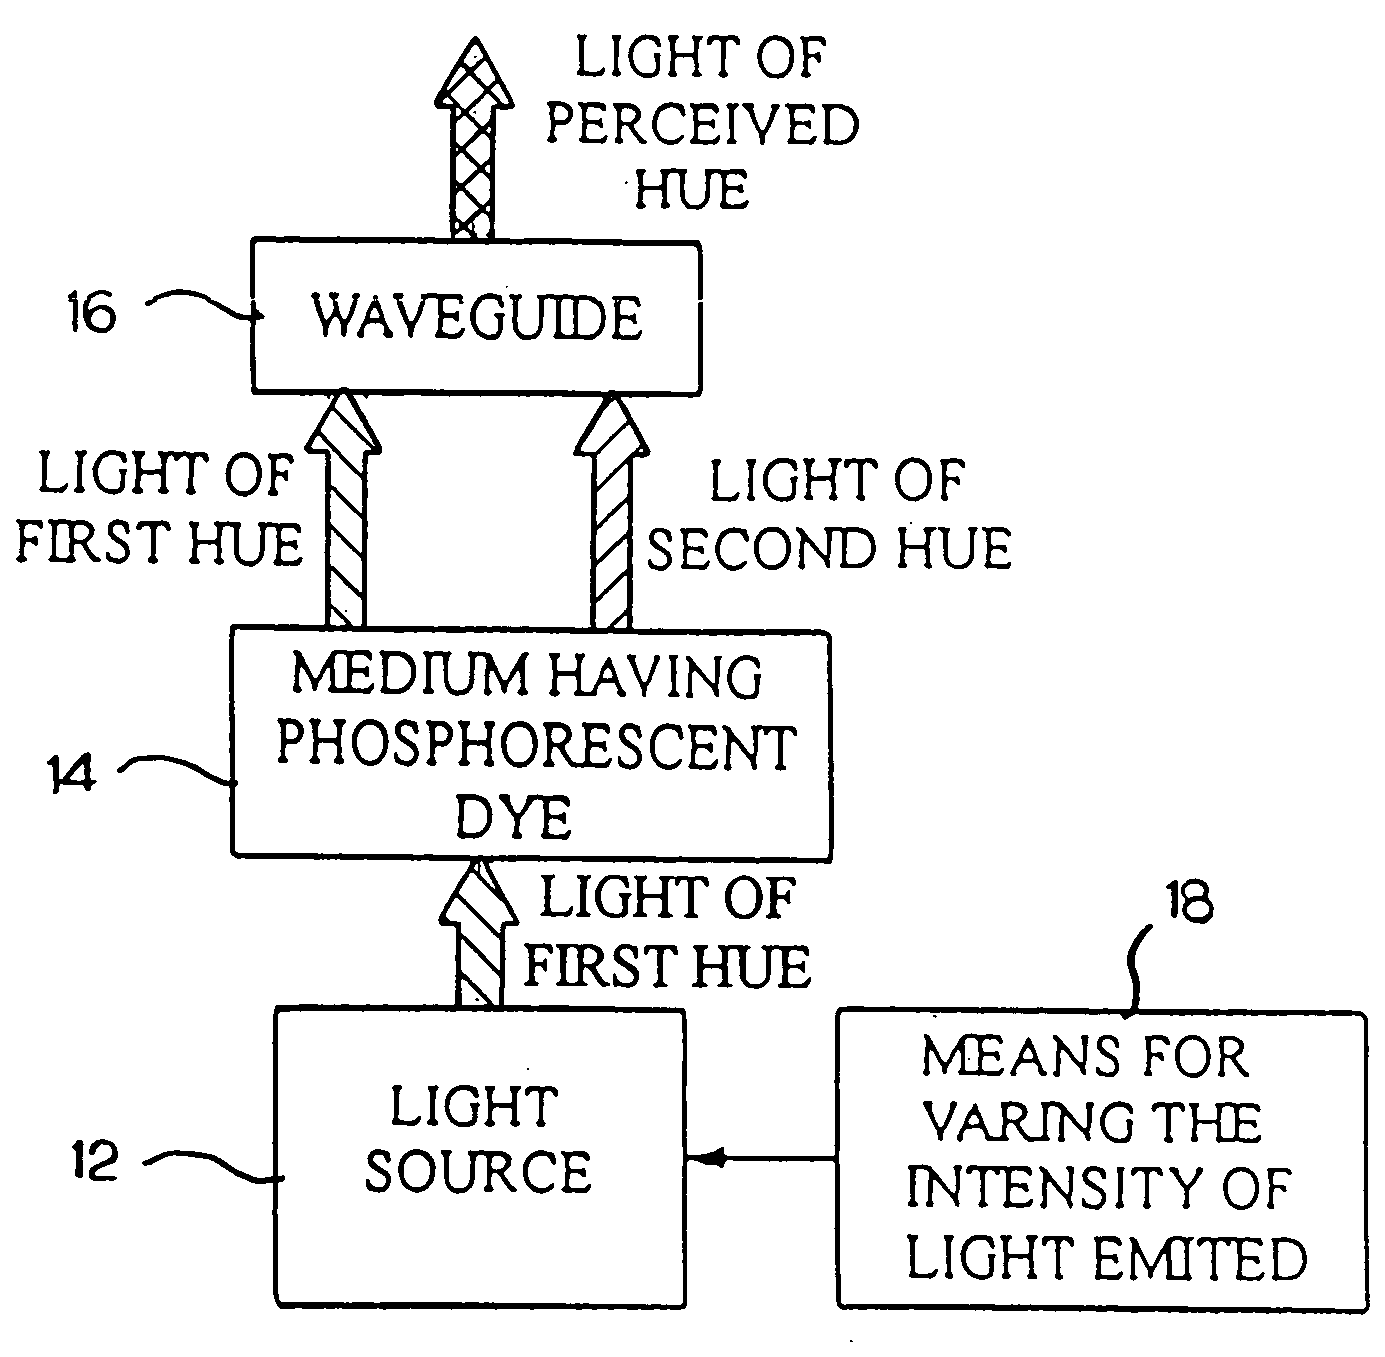 Illumination device for simulating neon or similar lighting using phosphorescent dye